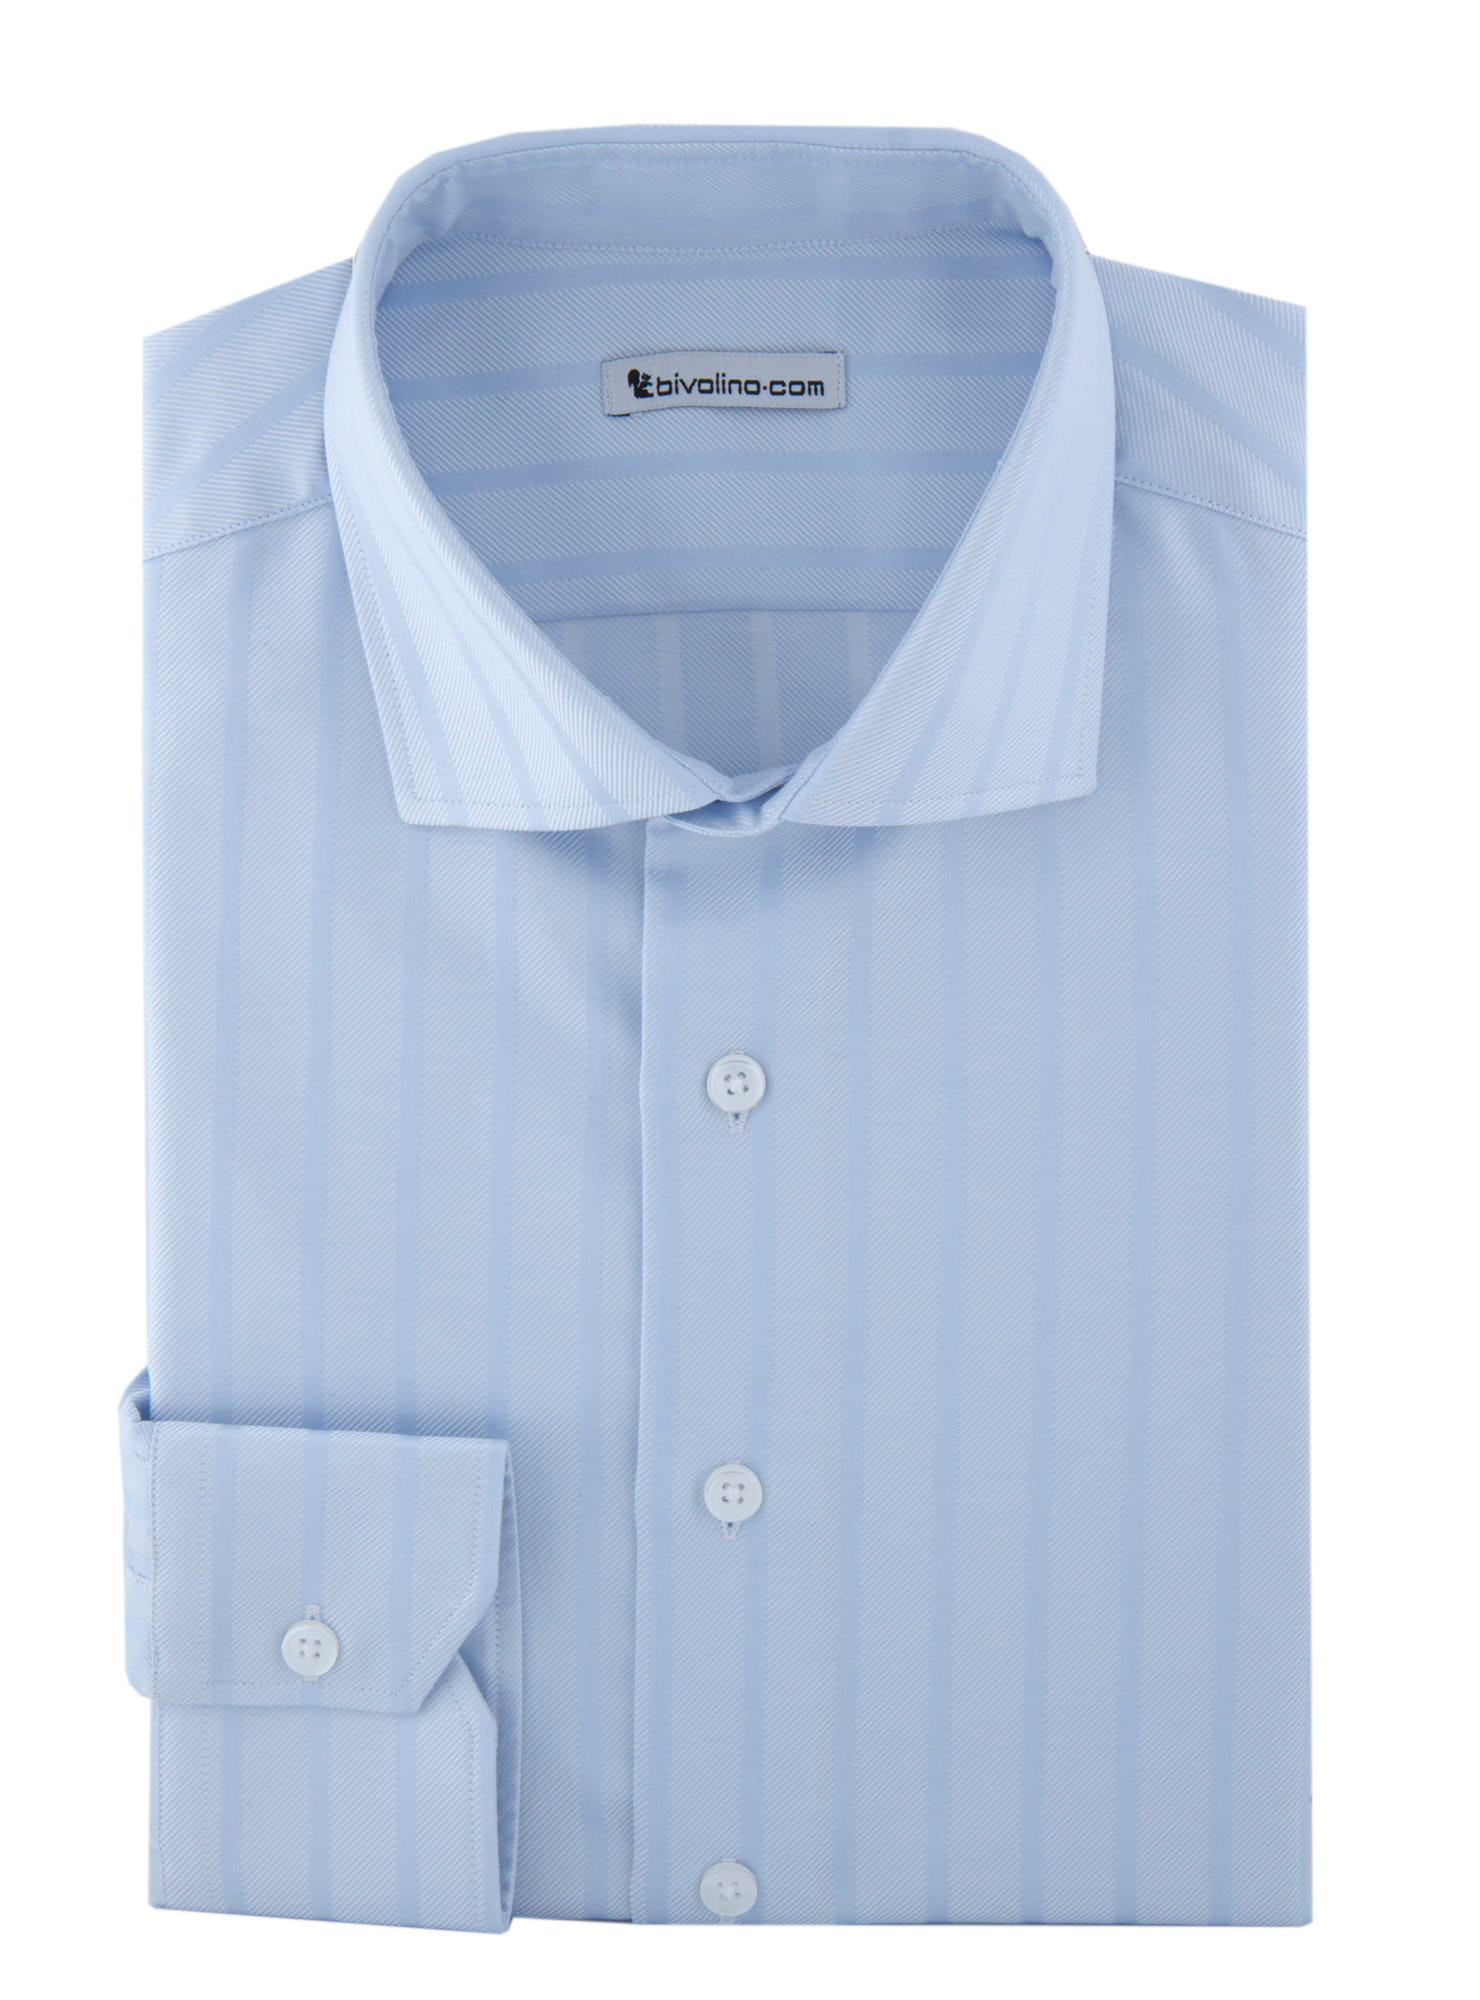 CESOLE - hemelsblauw twill overhemd - Trex 4